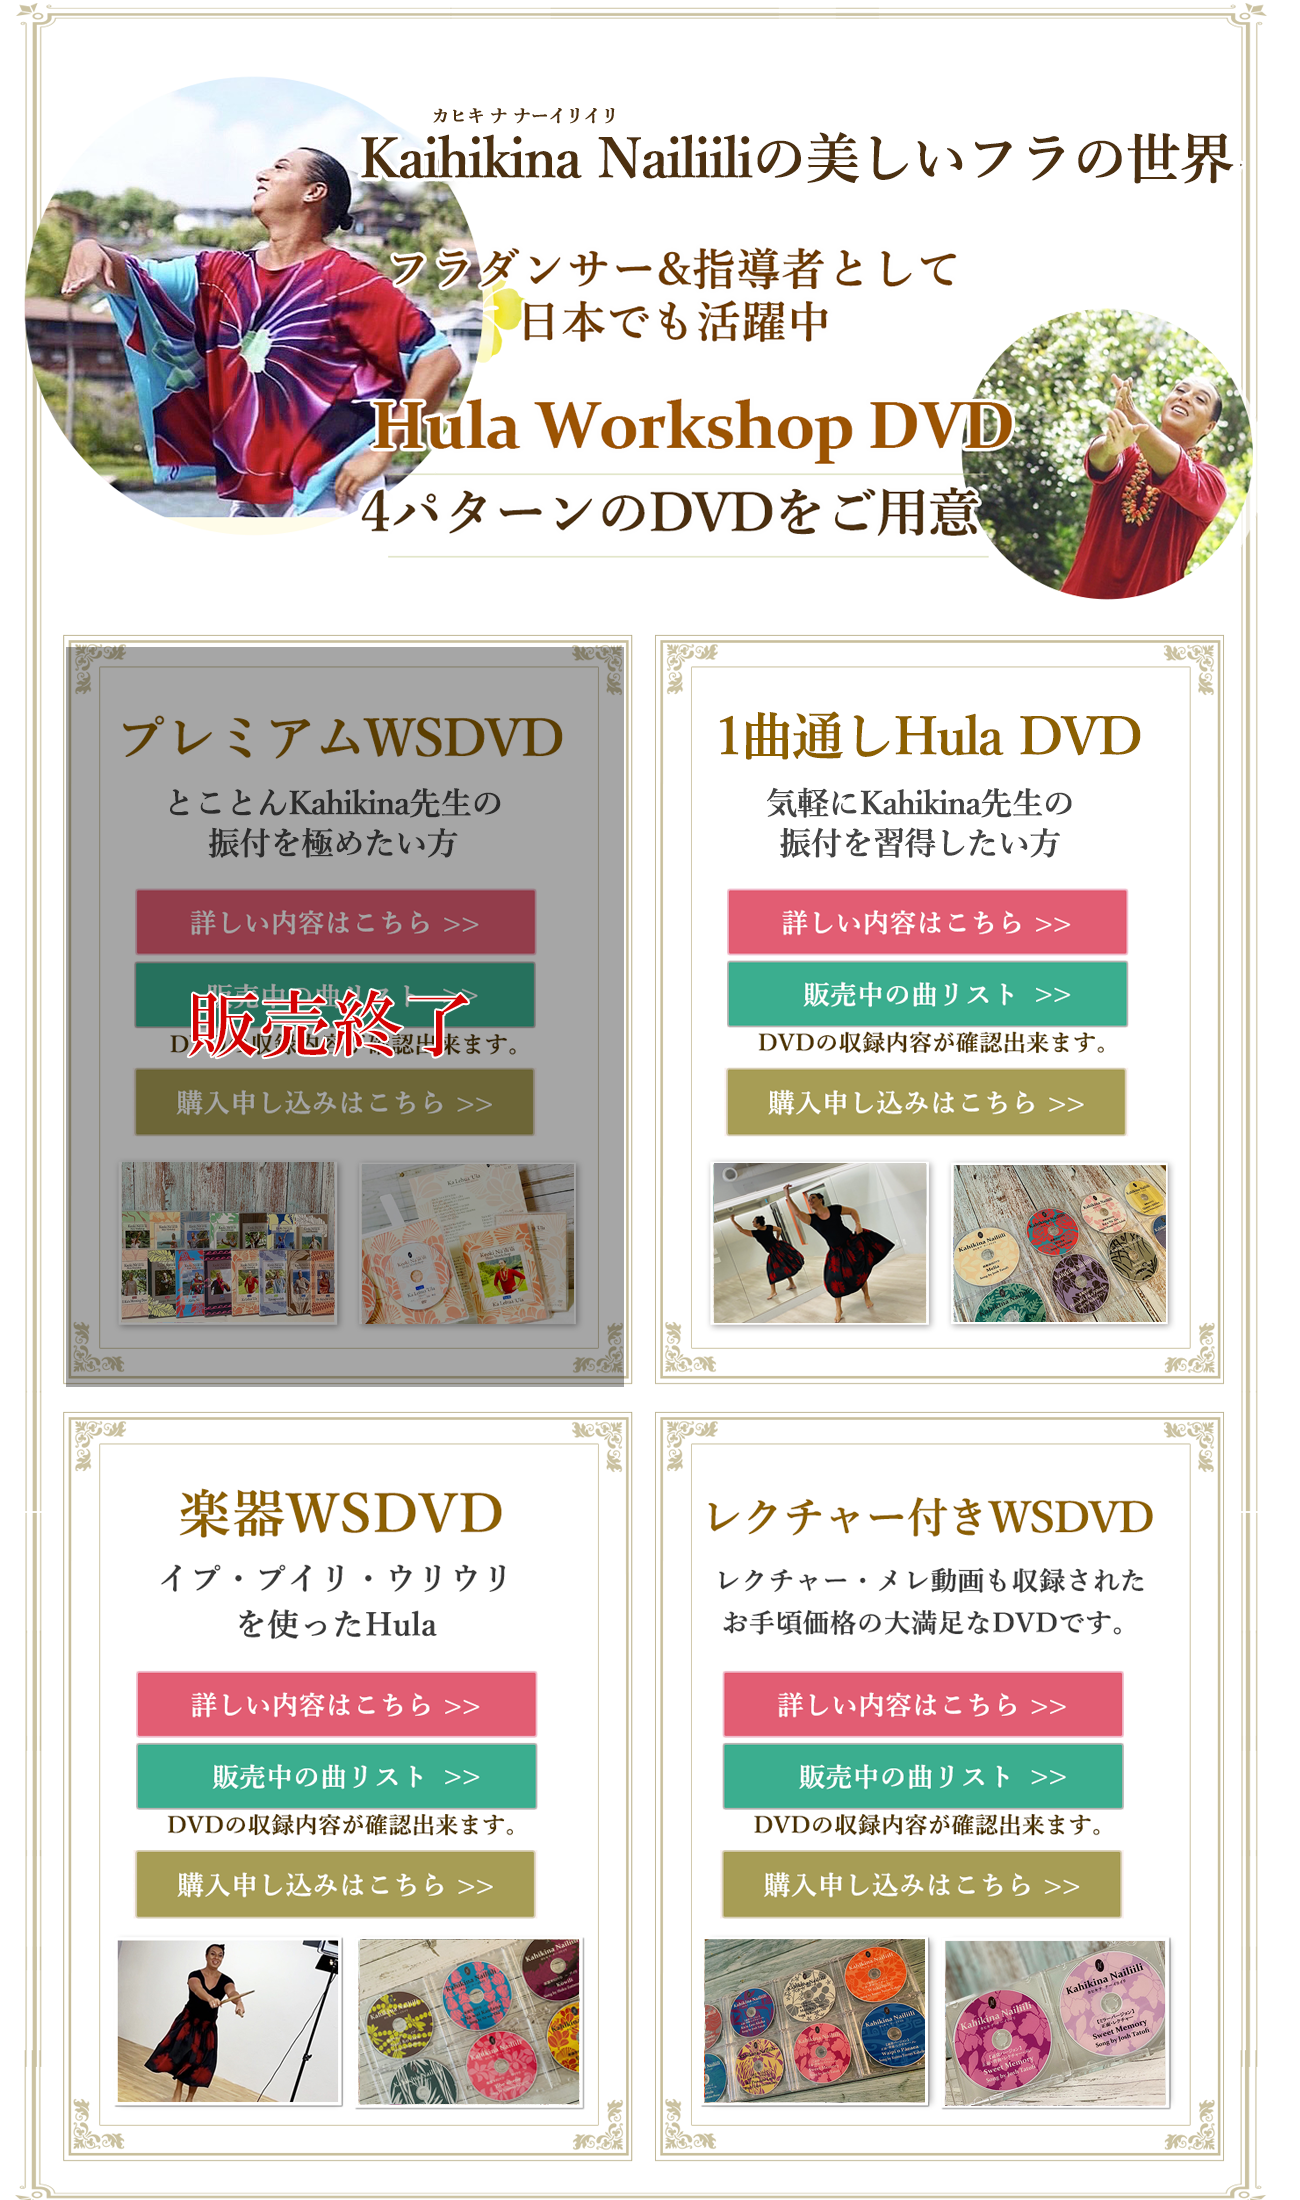 Keoki Naiiili ケオキ・ナーイリイリ 模範映像 レクチャー付き Hula Workshop DVD